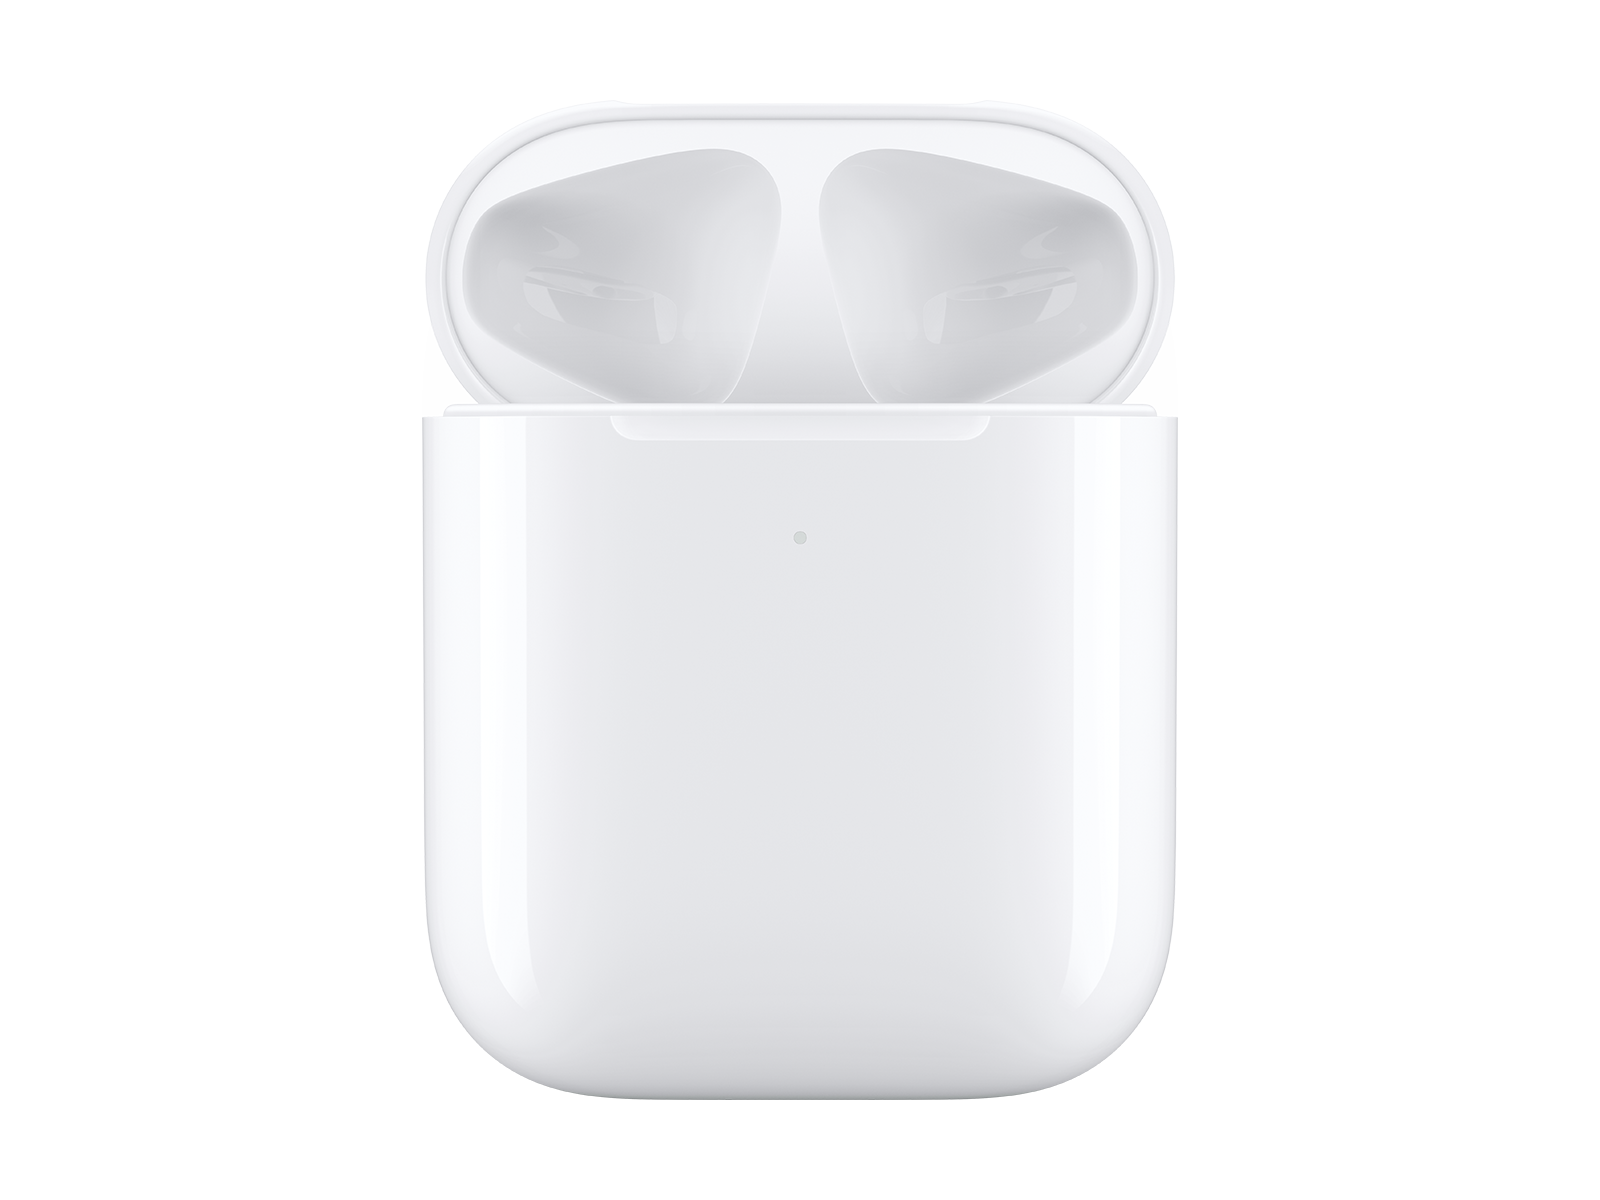 Беспроводной чехол airpods 2. Apple кейс для AIRPODS 2. Case Apple AIRPODS Pro 2. Apple AIRPODS 2 Wireless Charging Case. Зарядный кейс для аирподс 2.